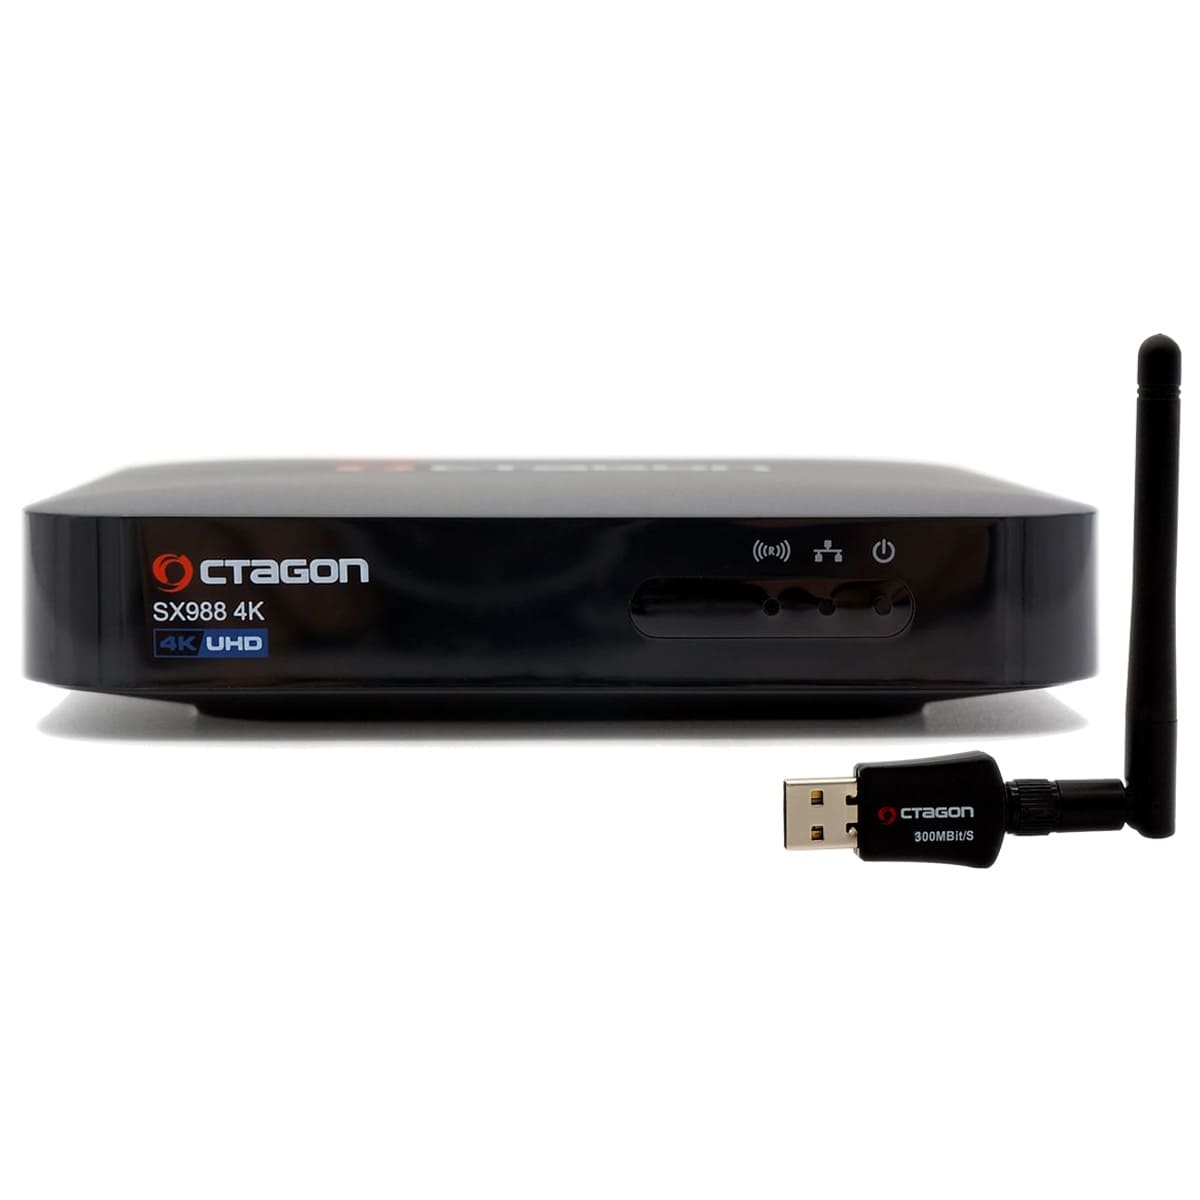 Wifi SX988 Mbit/s GB IP OCTAGON 8 300